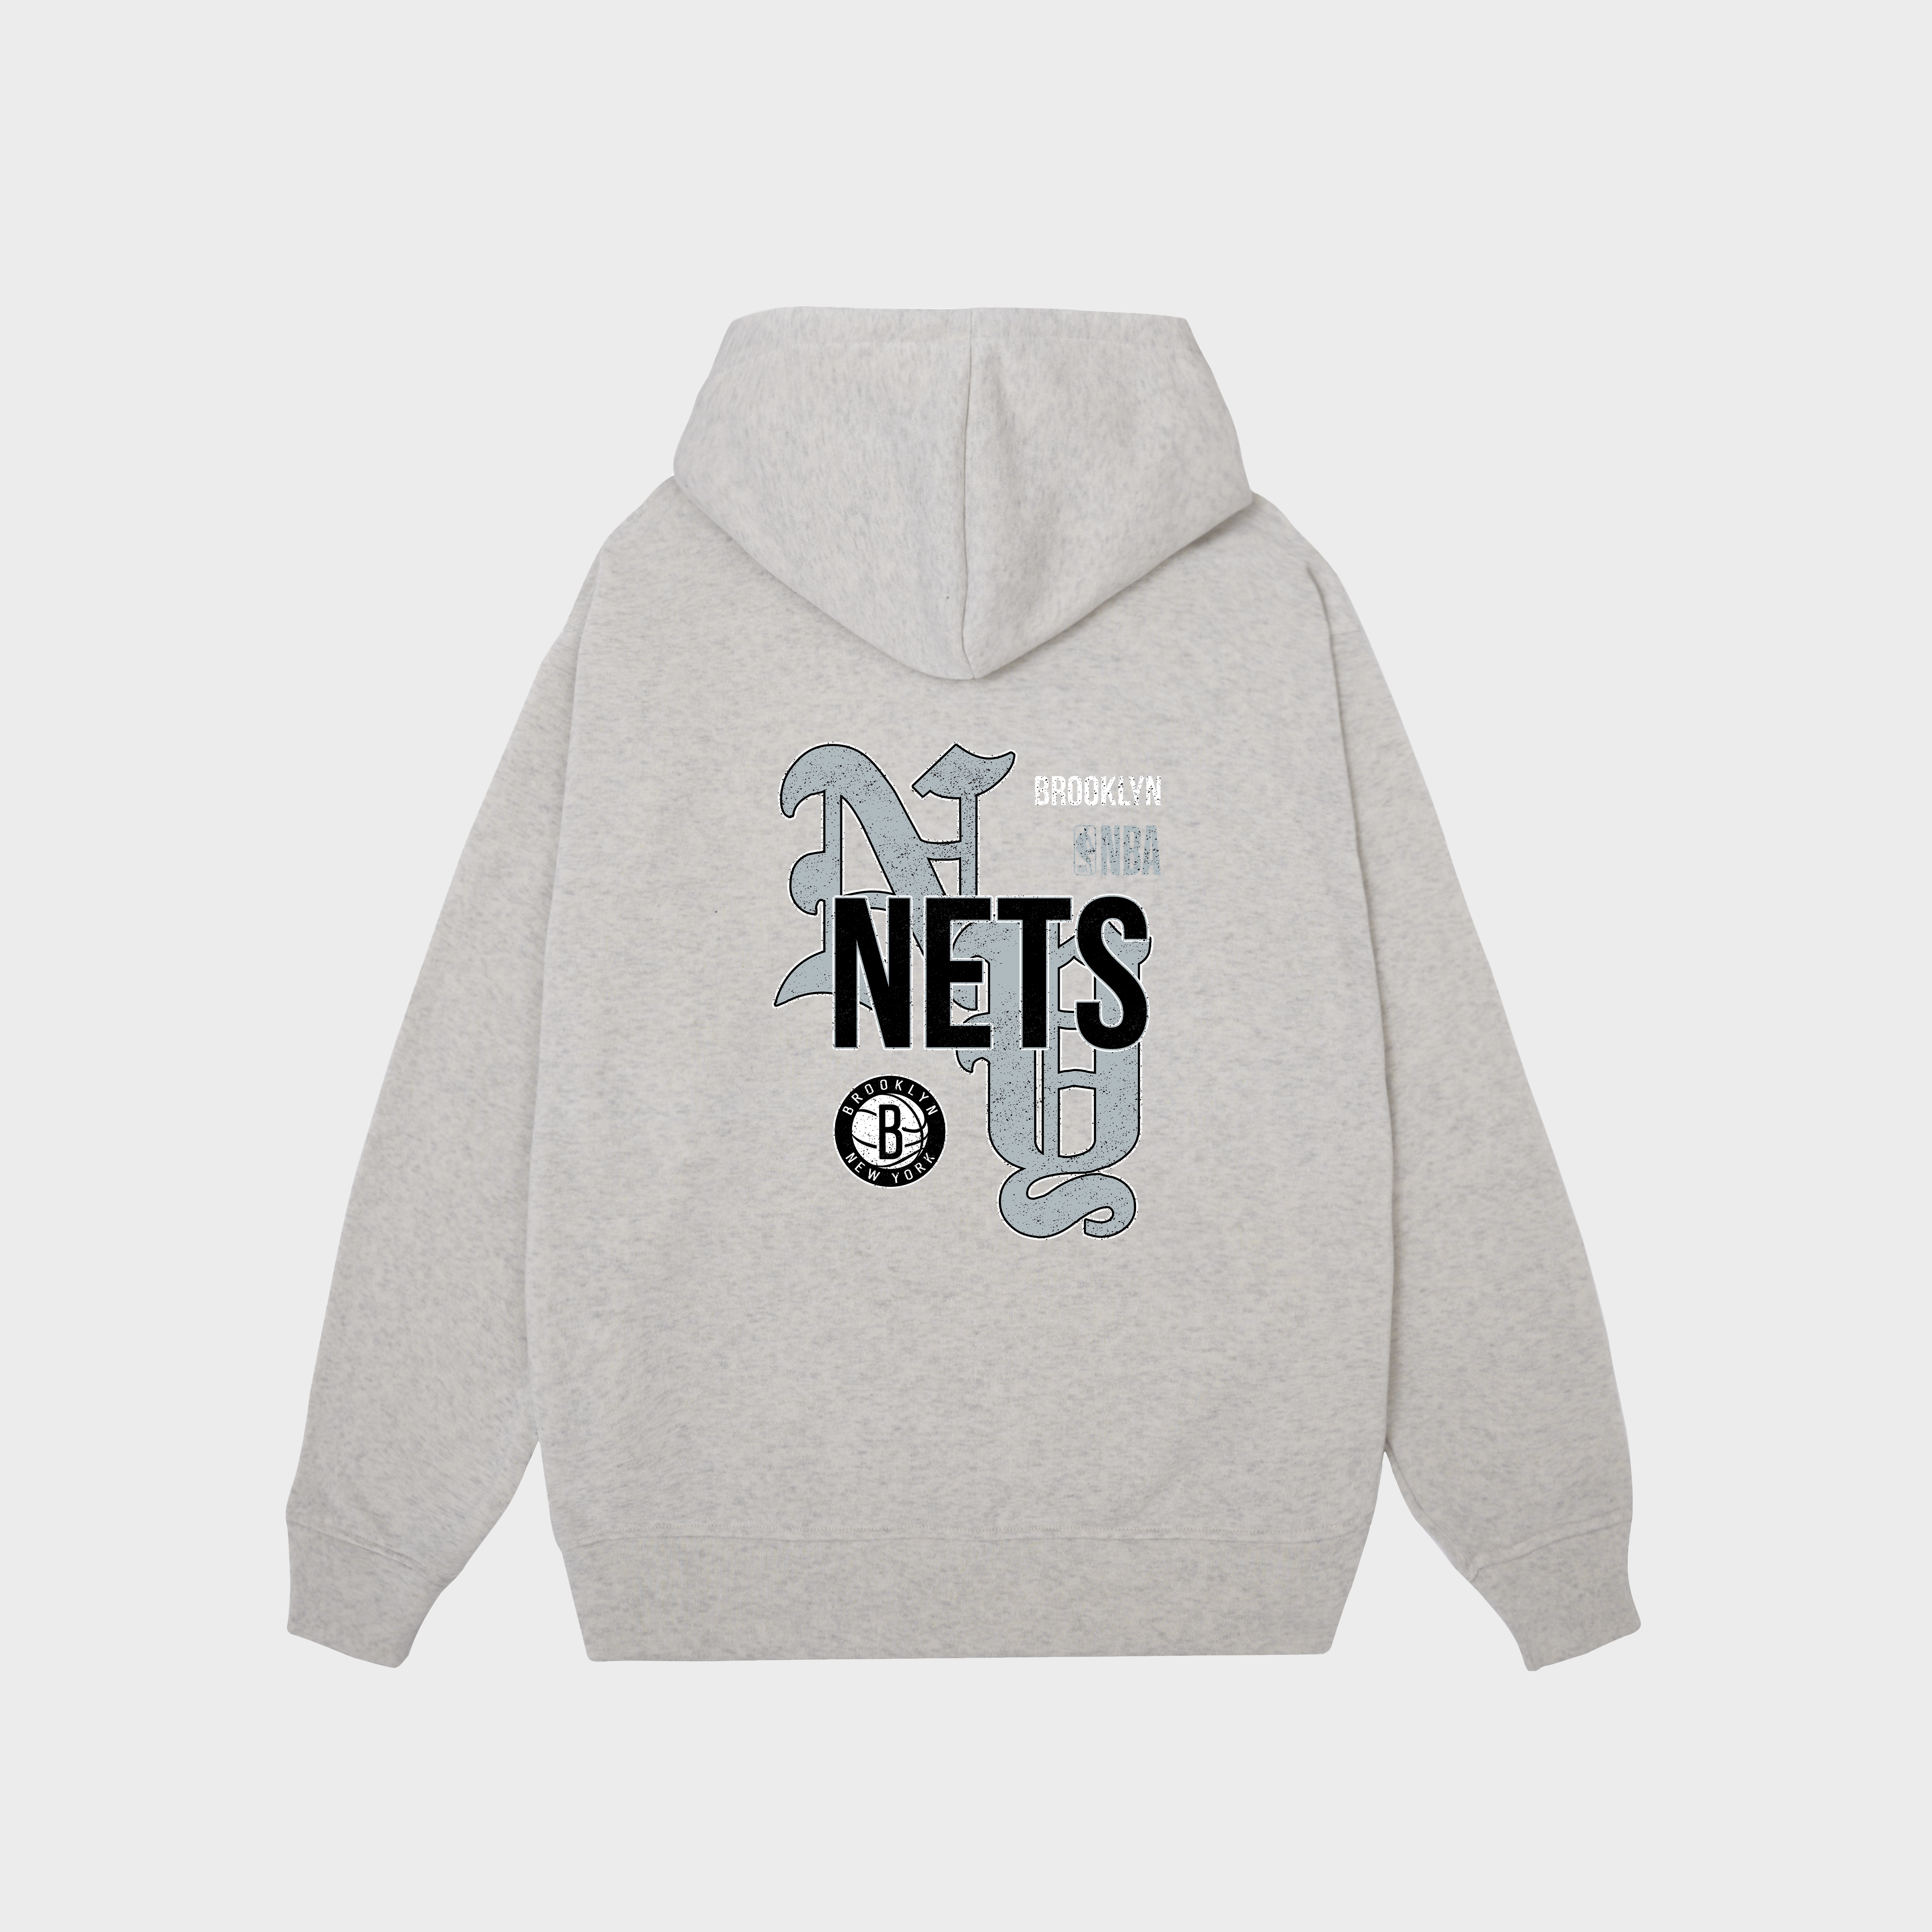 NBA Brooklyn Nets Team Hoodie